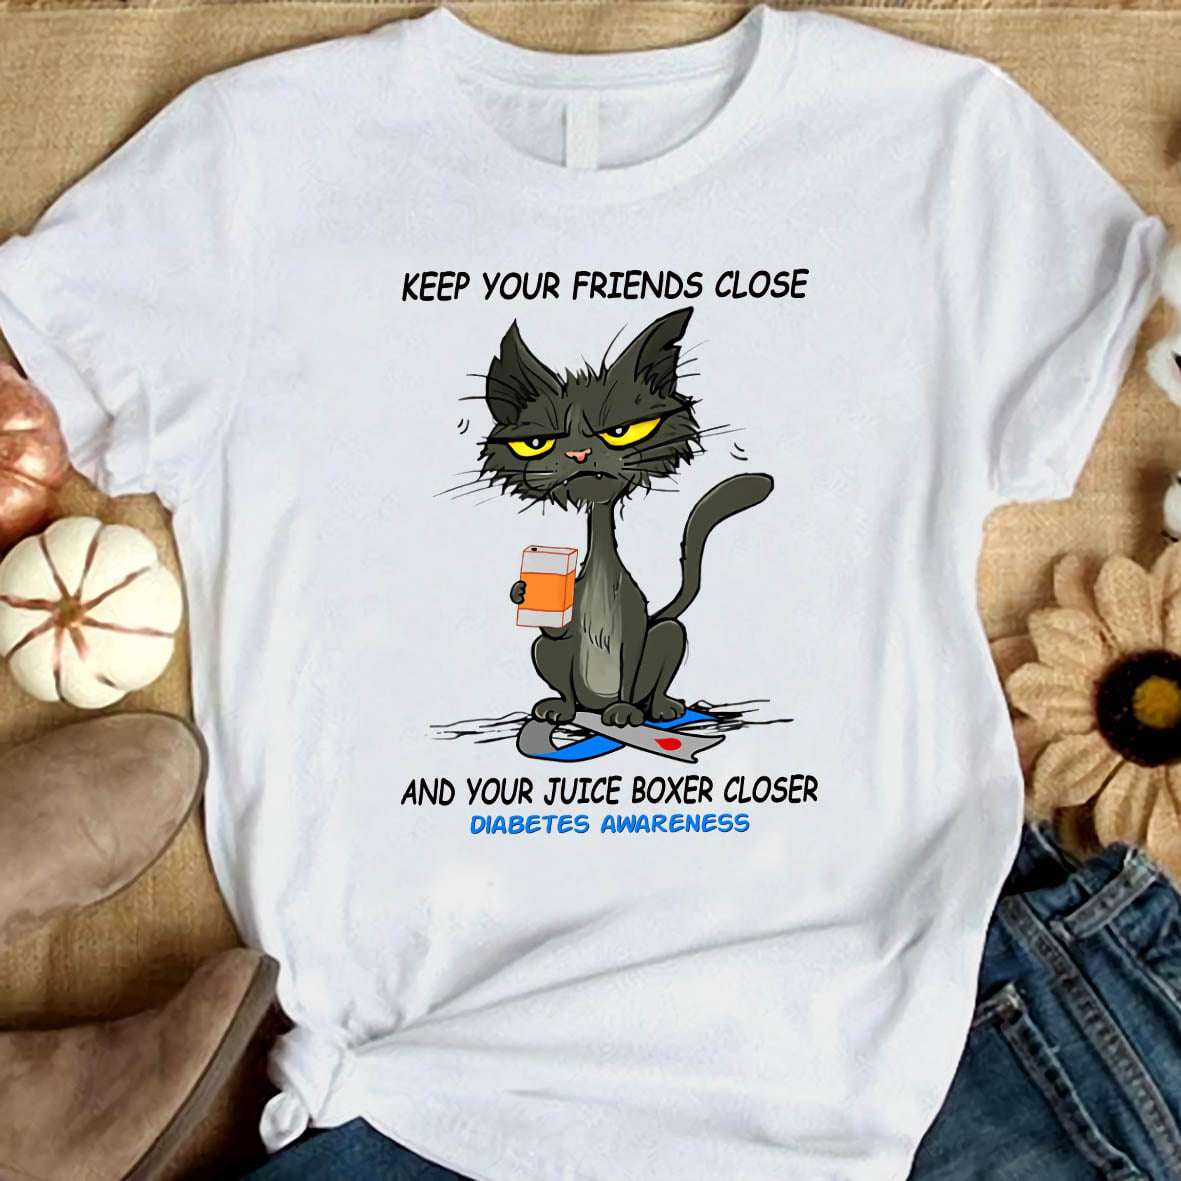 Keep your friends close and your juice boxer closer - Diabetes awareness, Diabetes black cat